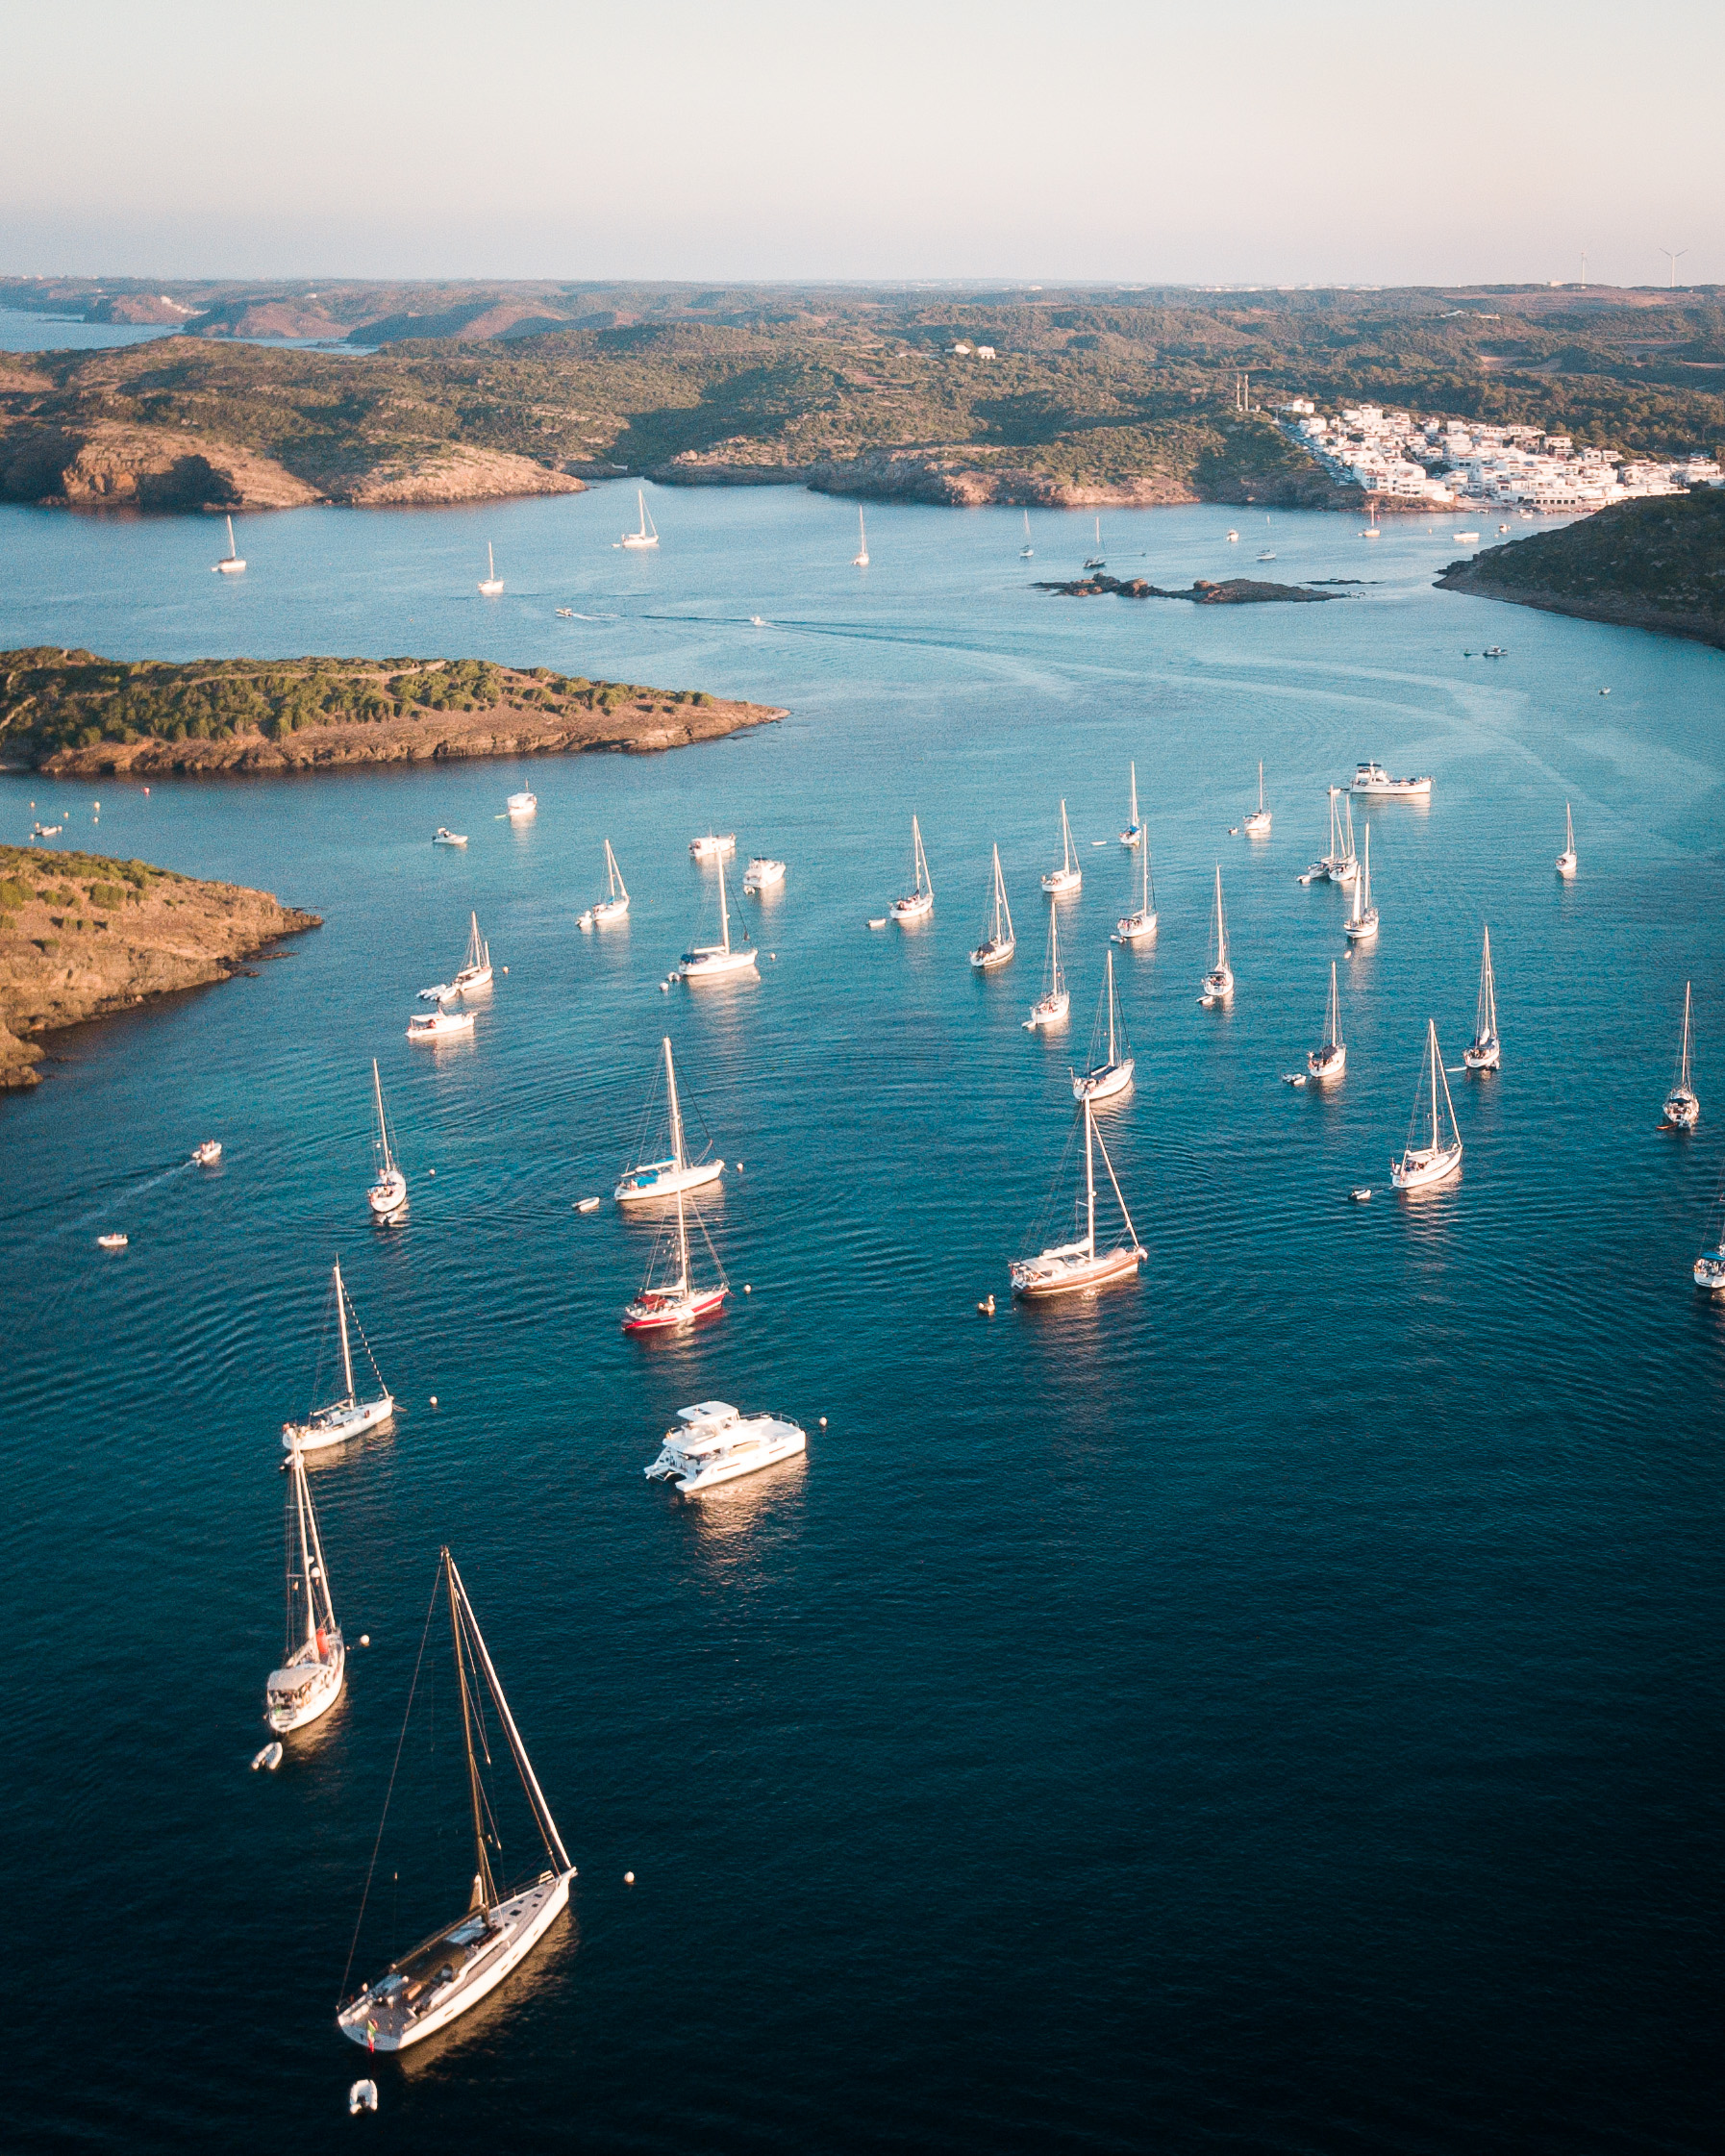 menorca island colom drone sailboats mooring llaut excursion boat rental